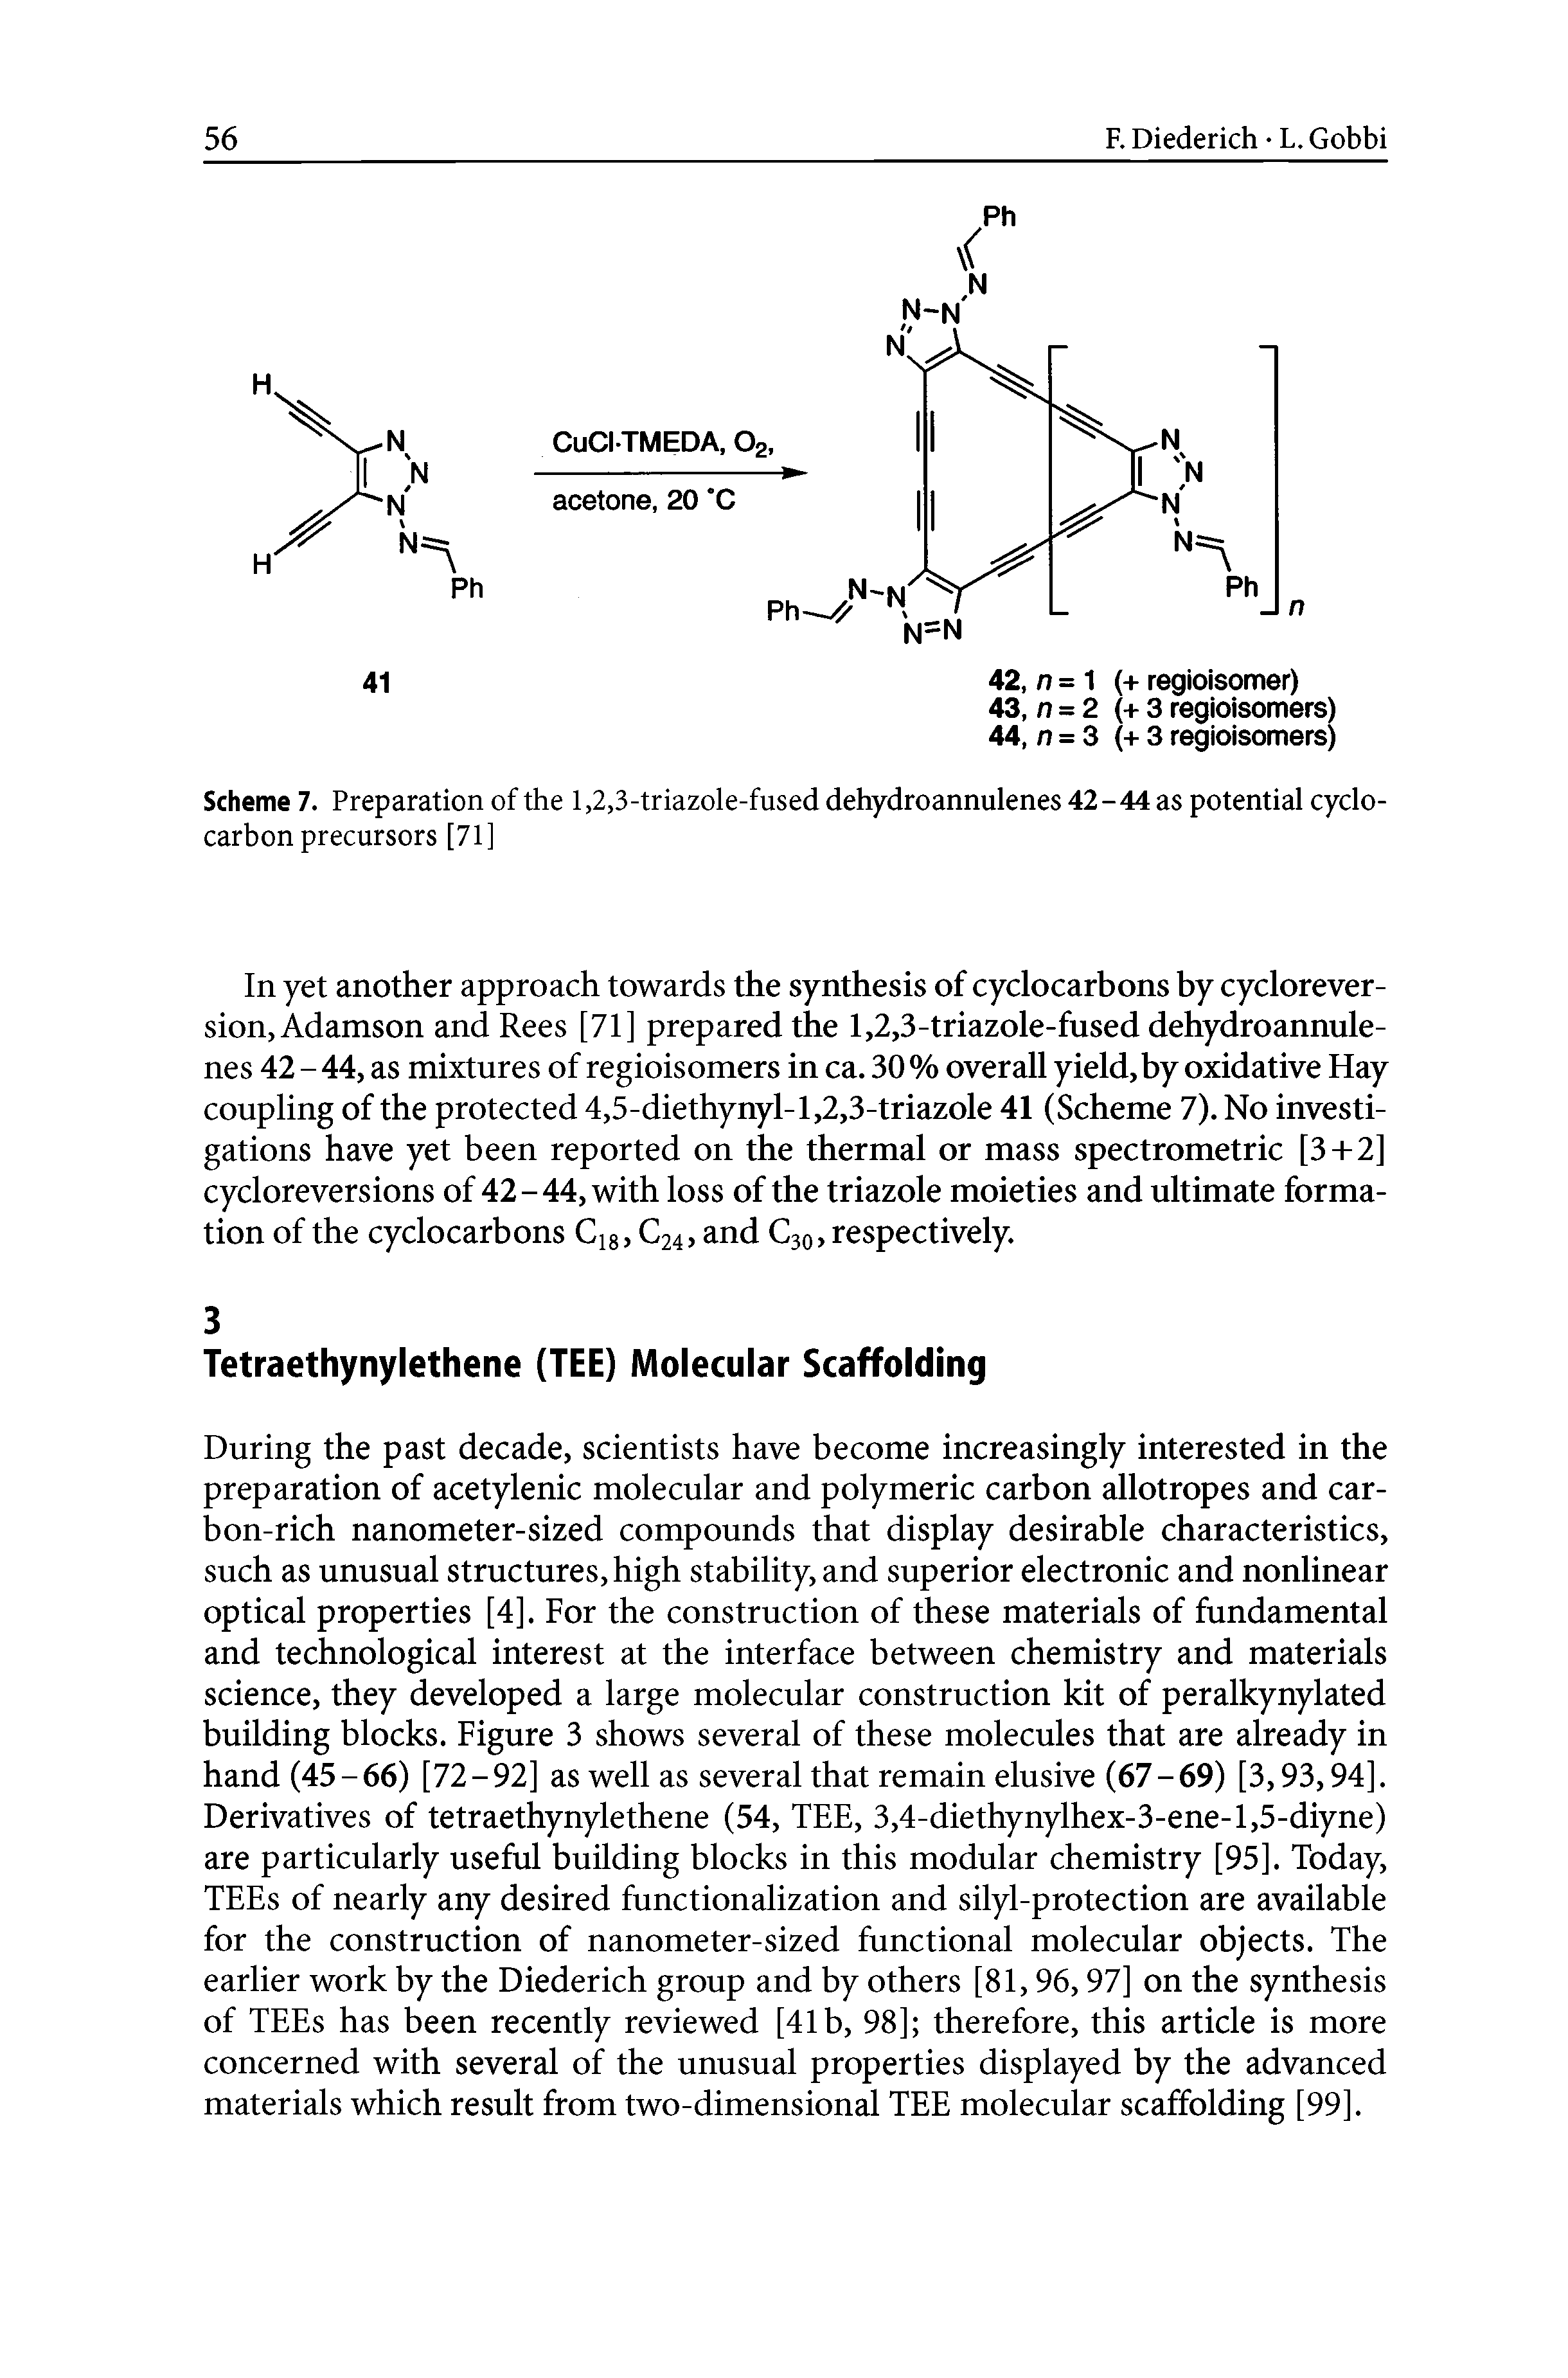 Scheme 7. Preparation of the 1,2,3-triazole-fused dehydroannulenes 42 - 44 as potential cyclocarbon precursors [71]...